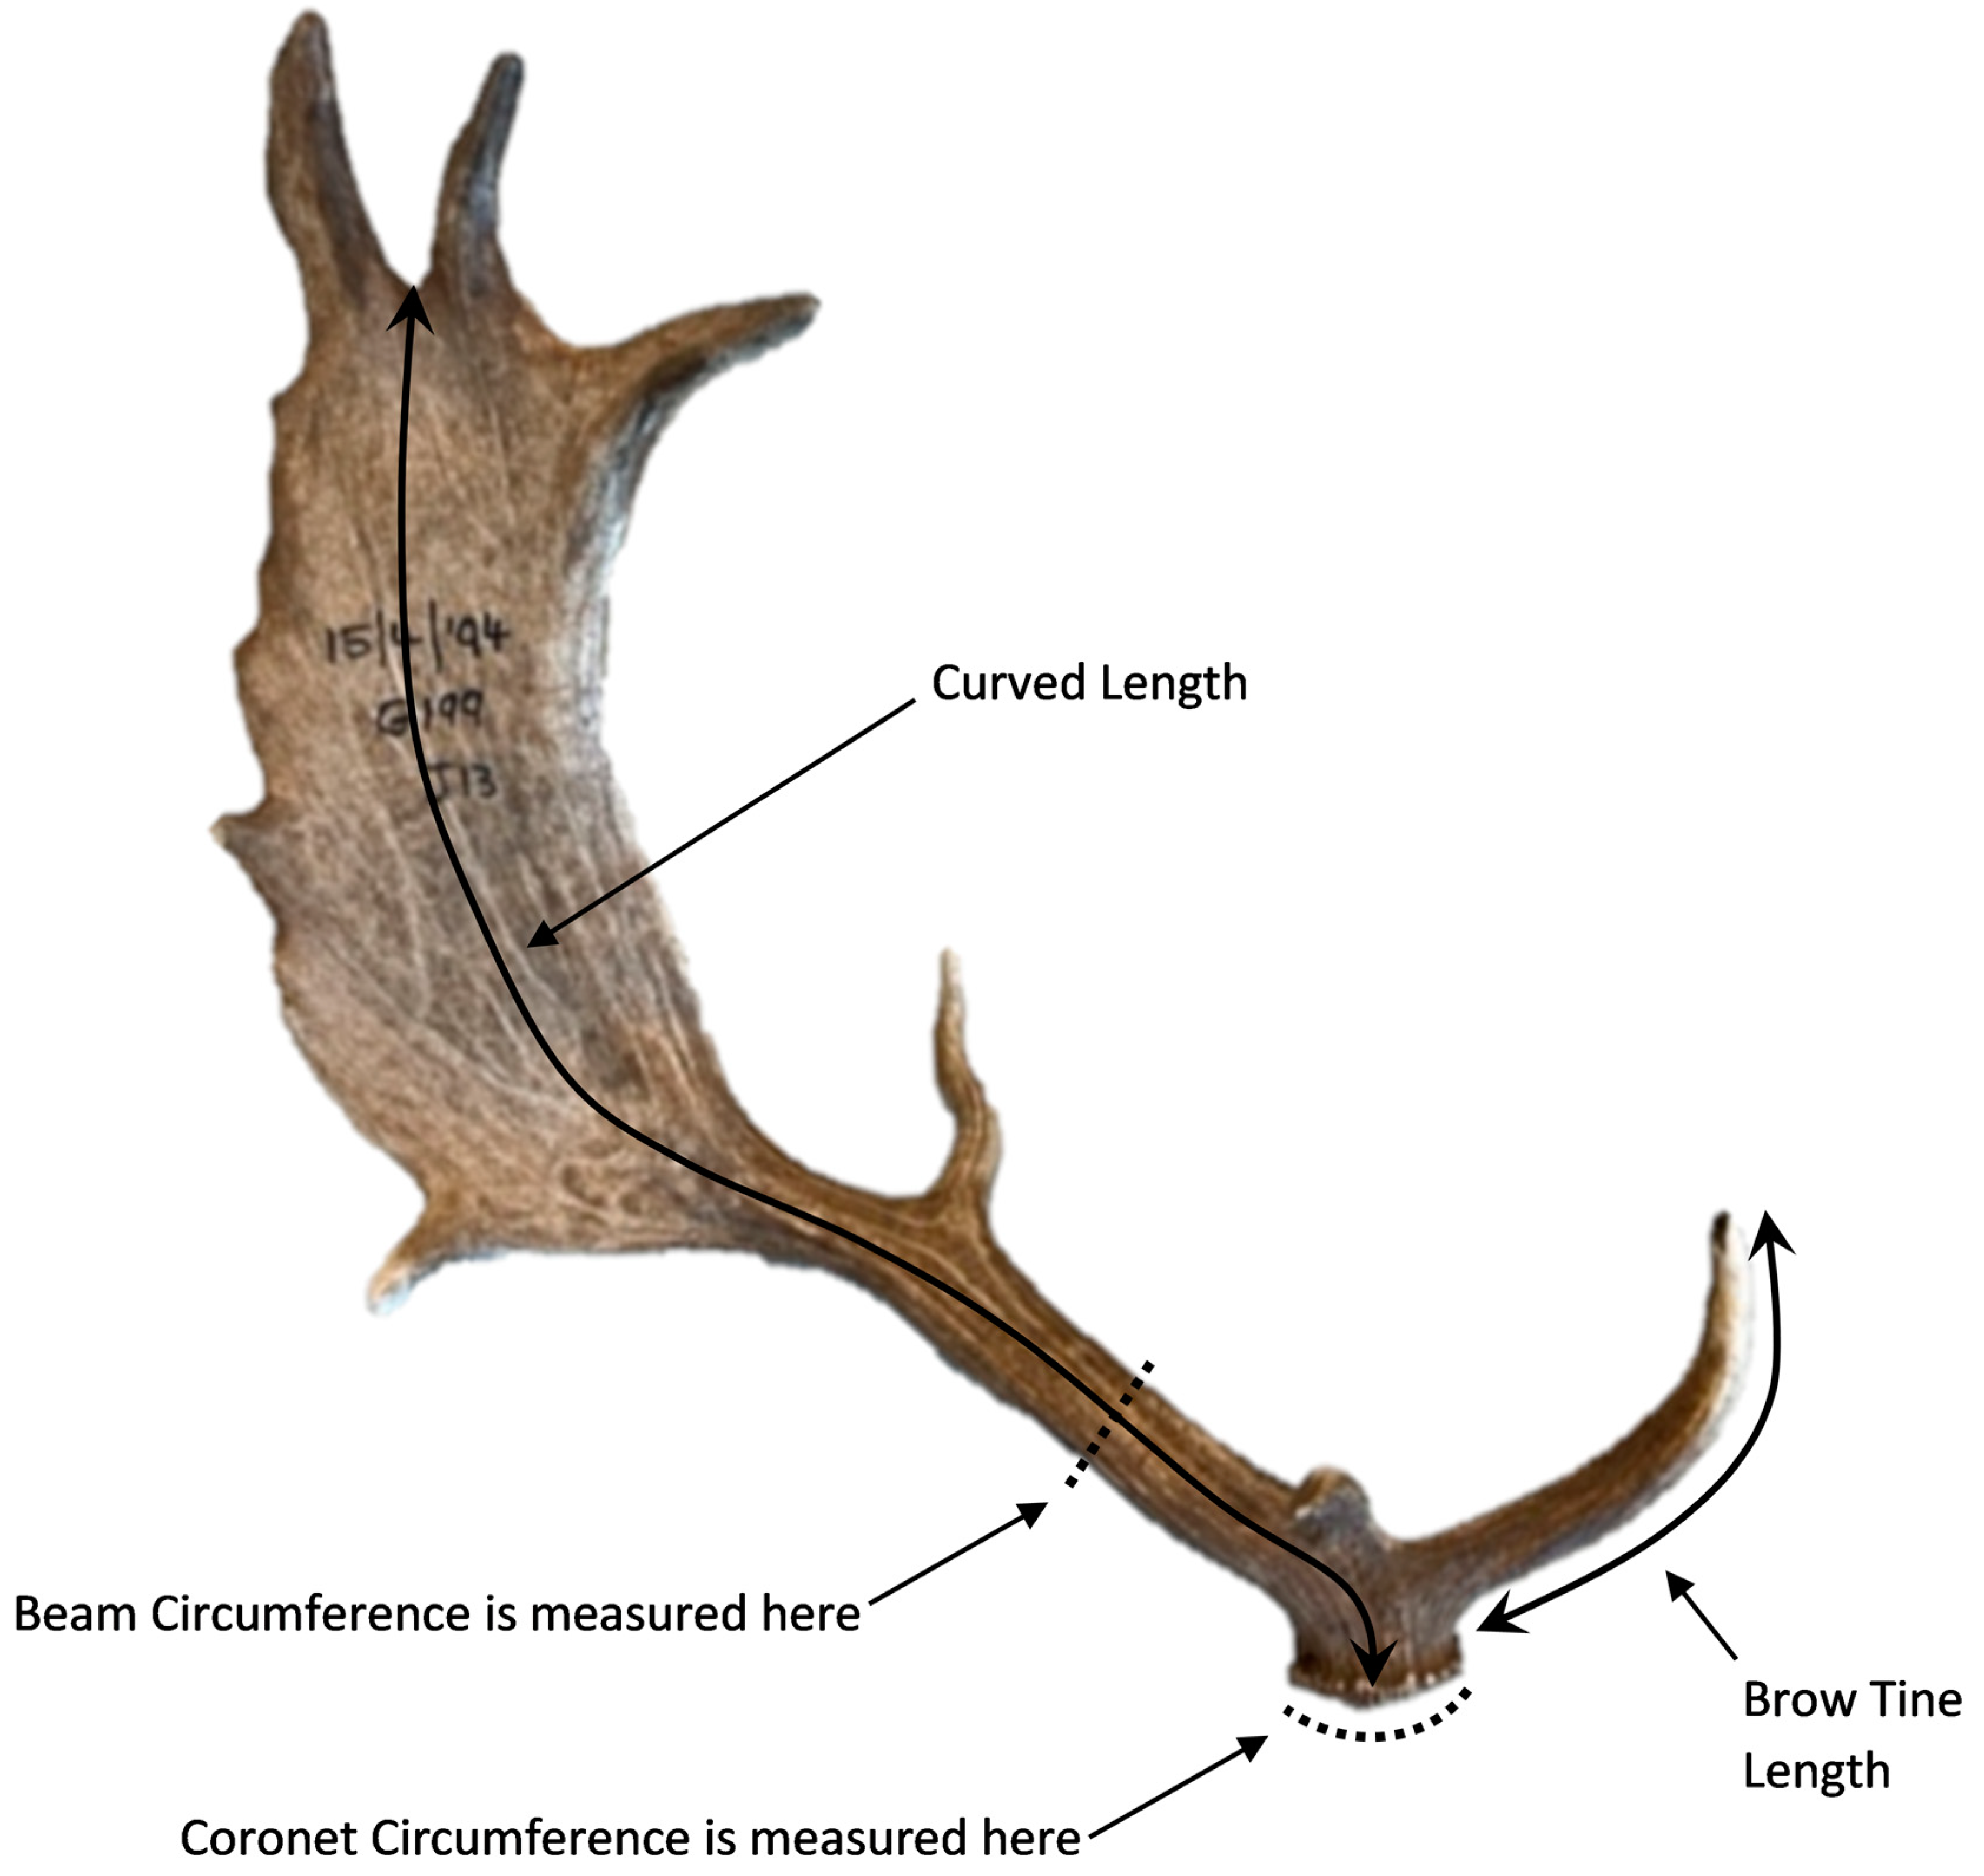 Sampling technique for adult deer antlers: the antler bone was cut at